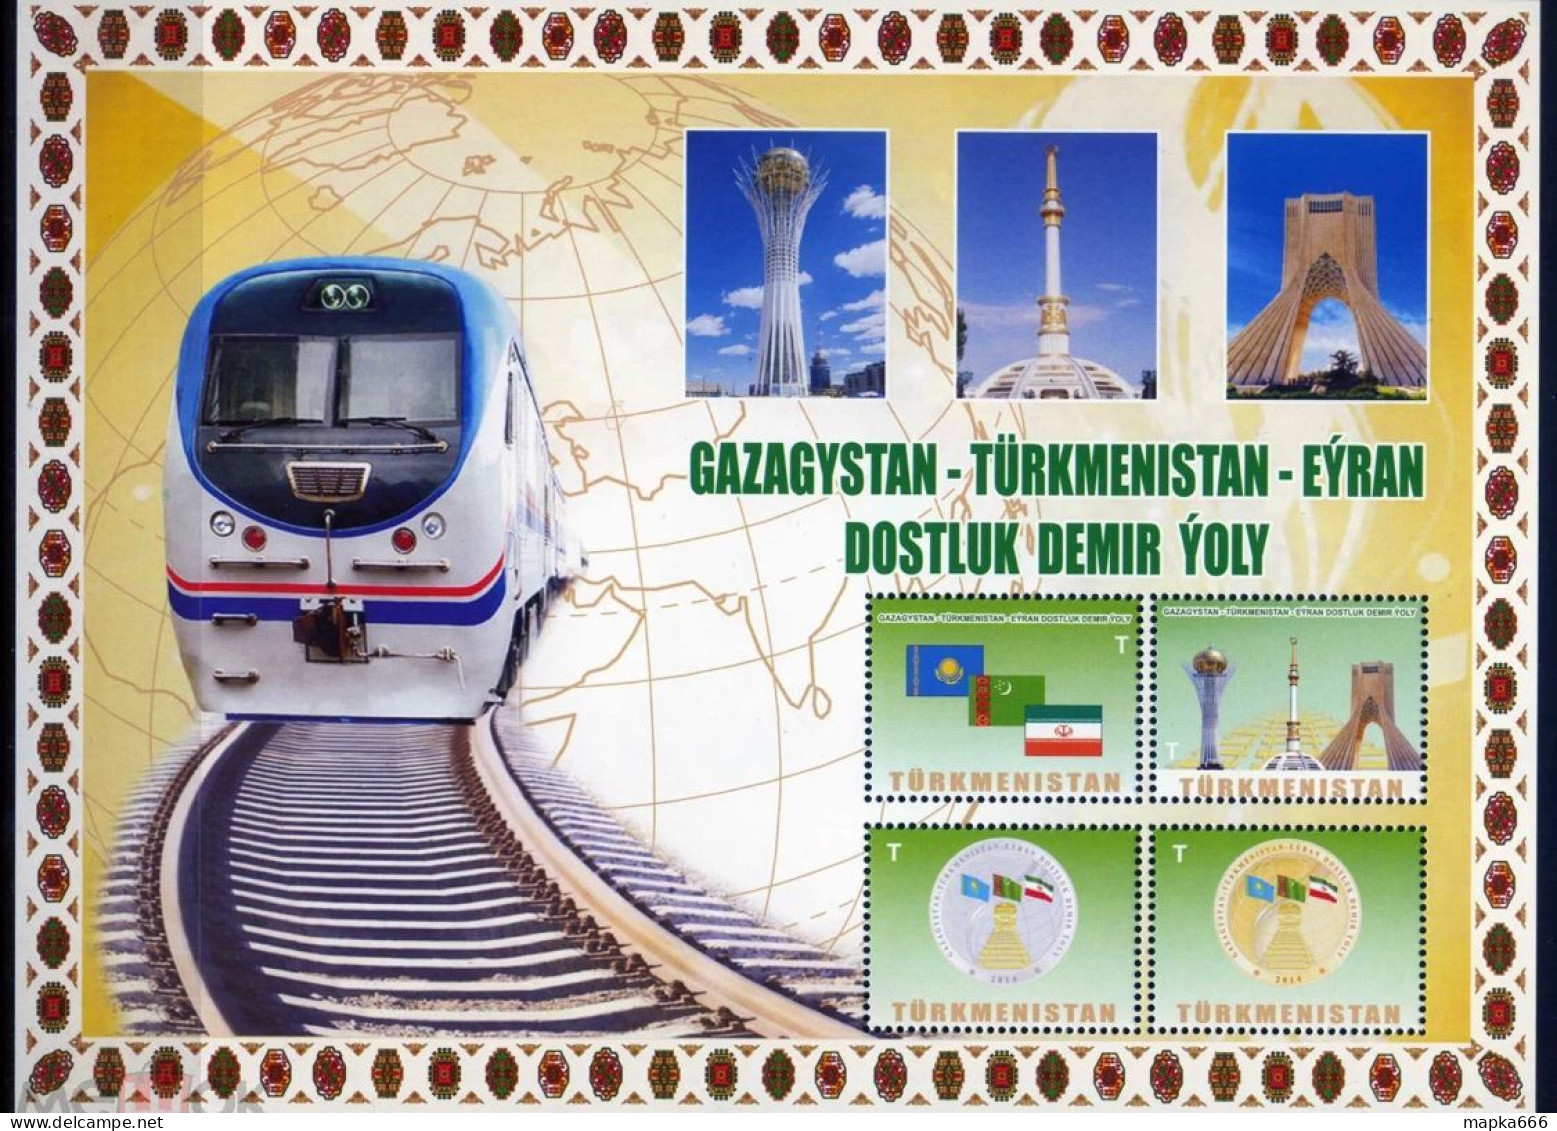 2014 Turkmenistan Friendship Railway line of Kazakhstan-Turkmenistan-Iran Trains ! Rare 6 blocks MNH